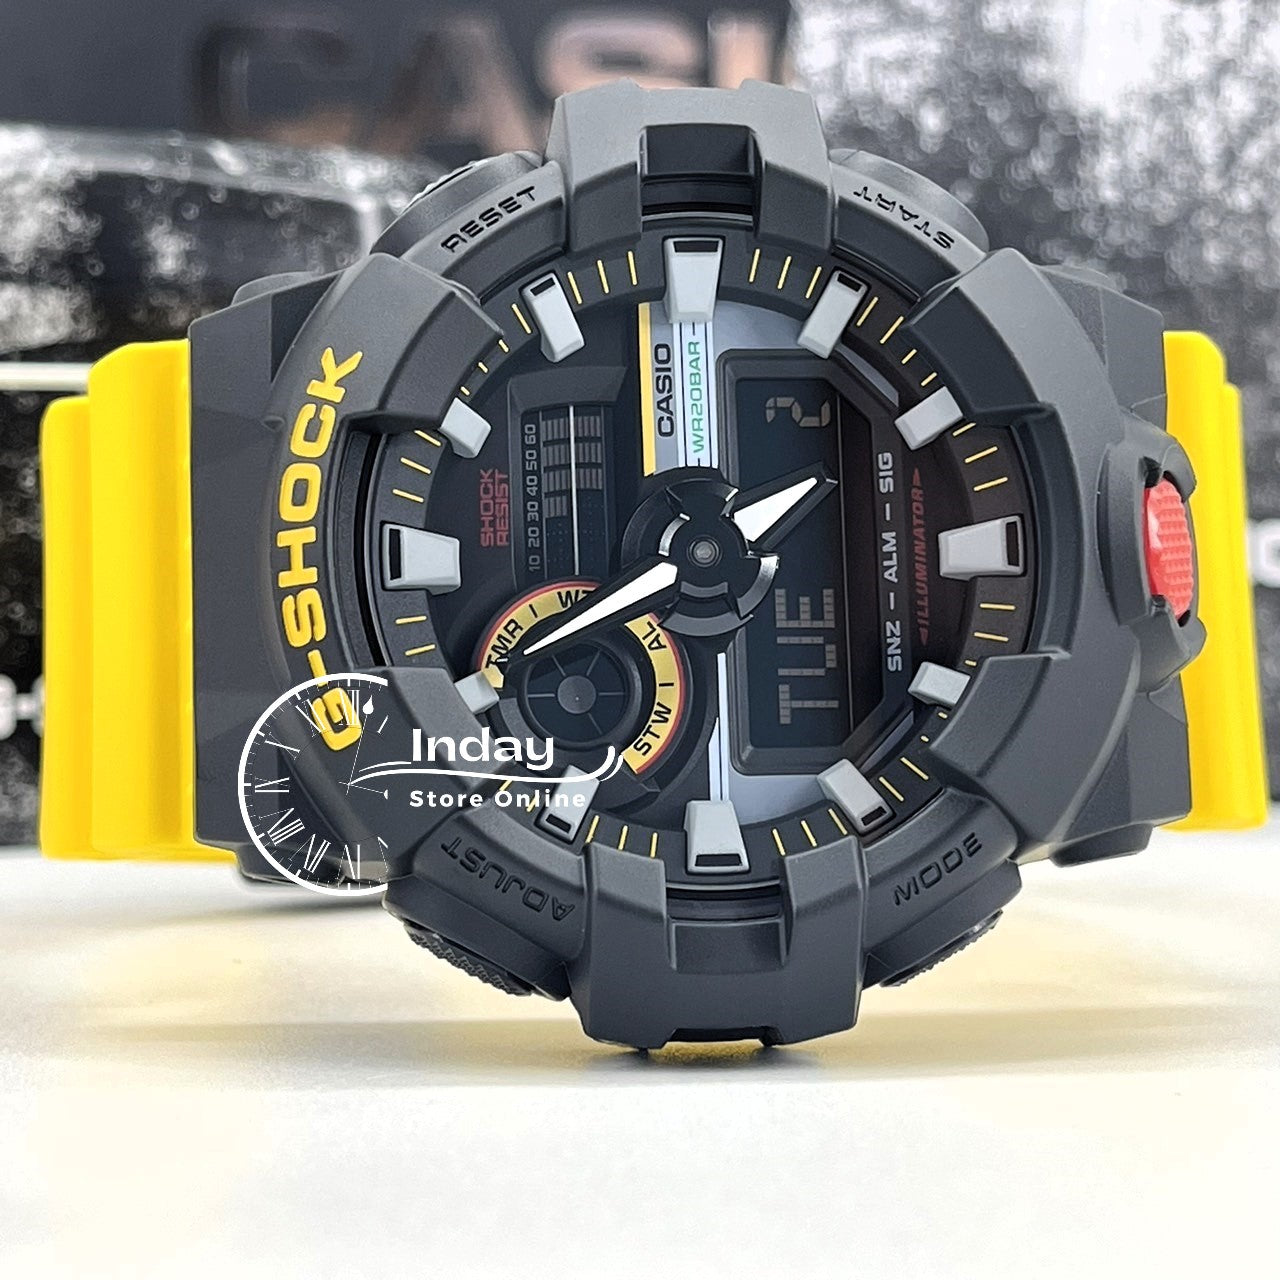 Casio G-Shock Men's Watch GA-700MT-1A9 Analog-Digital Shock Resistant Resin Band Mineral Glass